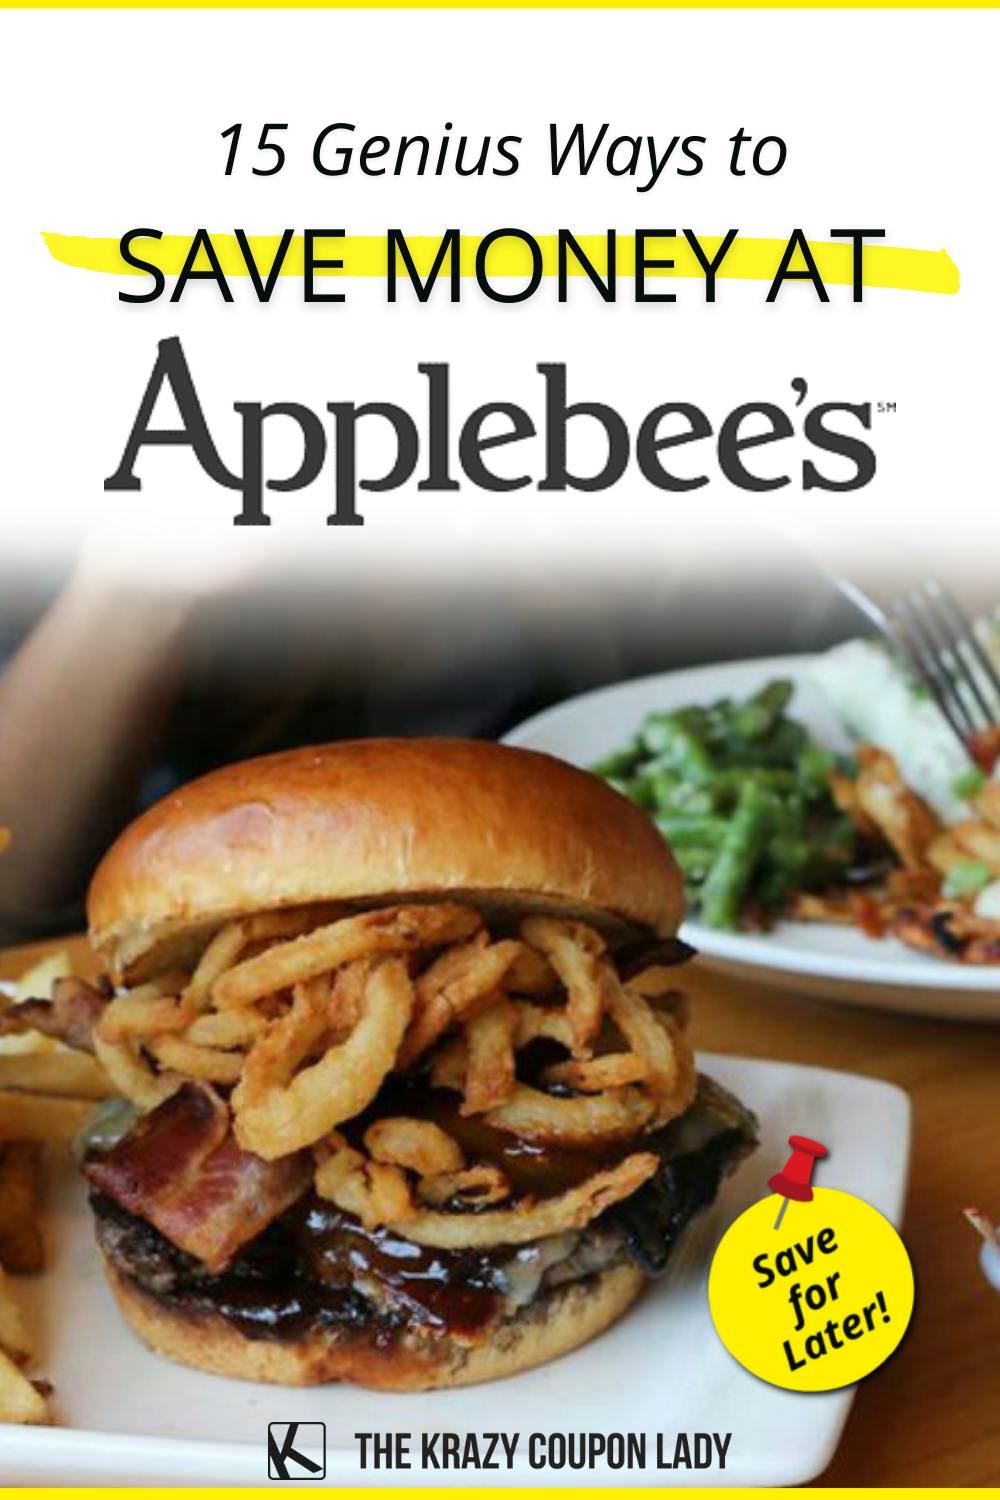 15 Applebee's Deals & Savings Tips That Seem Too Good to Be True